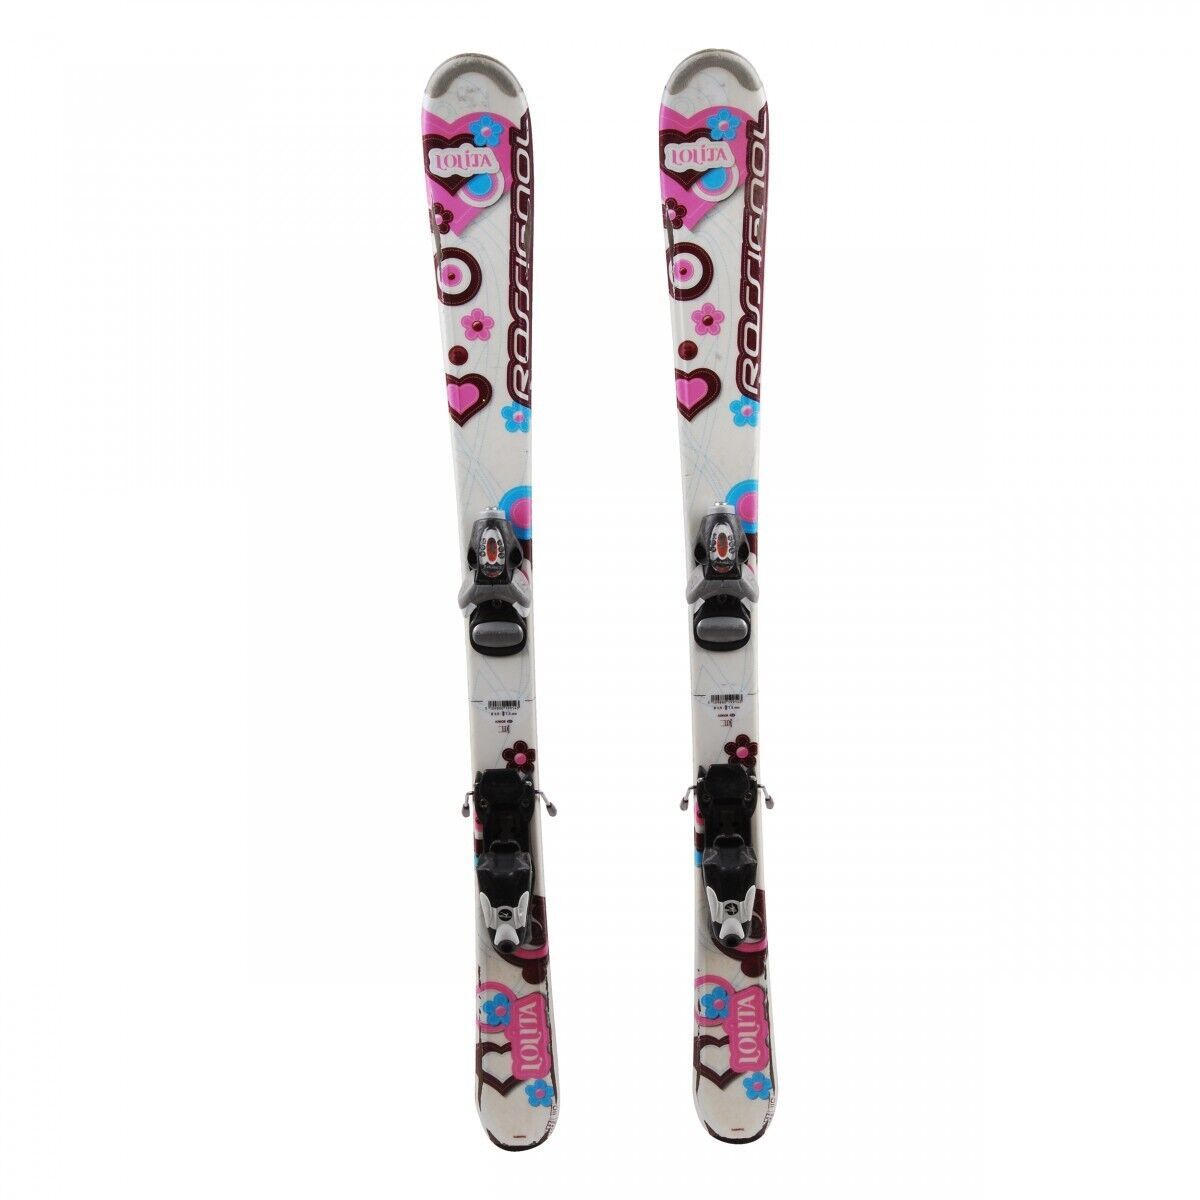 Skis d'occasion - Lolita - 130 cm